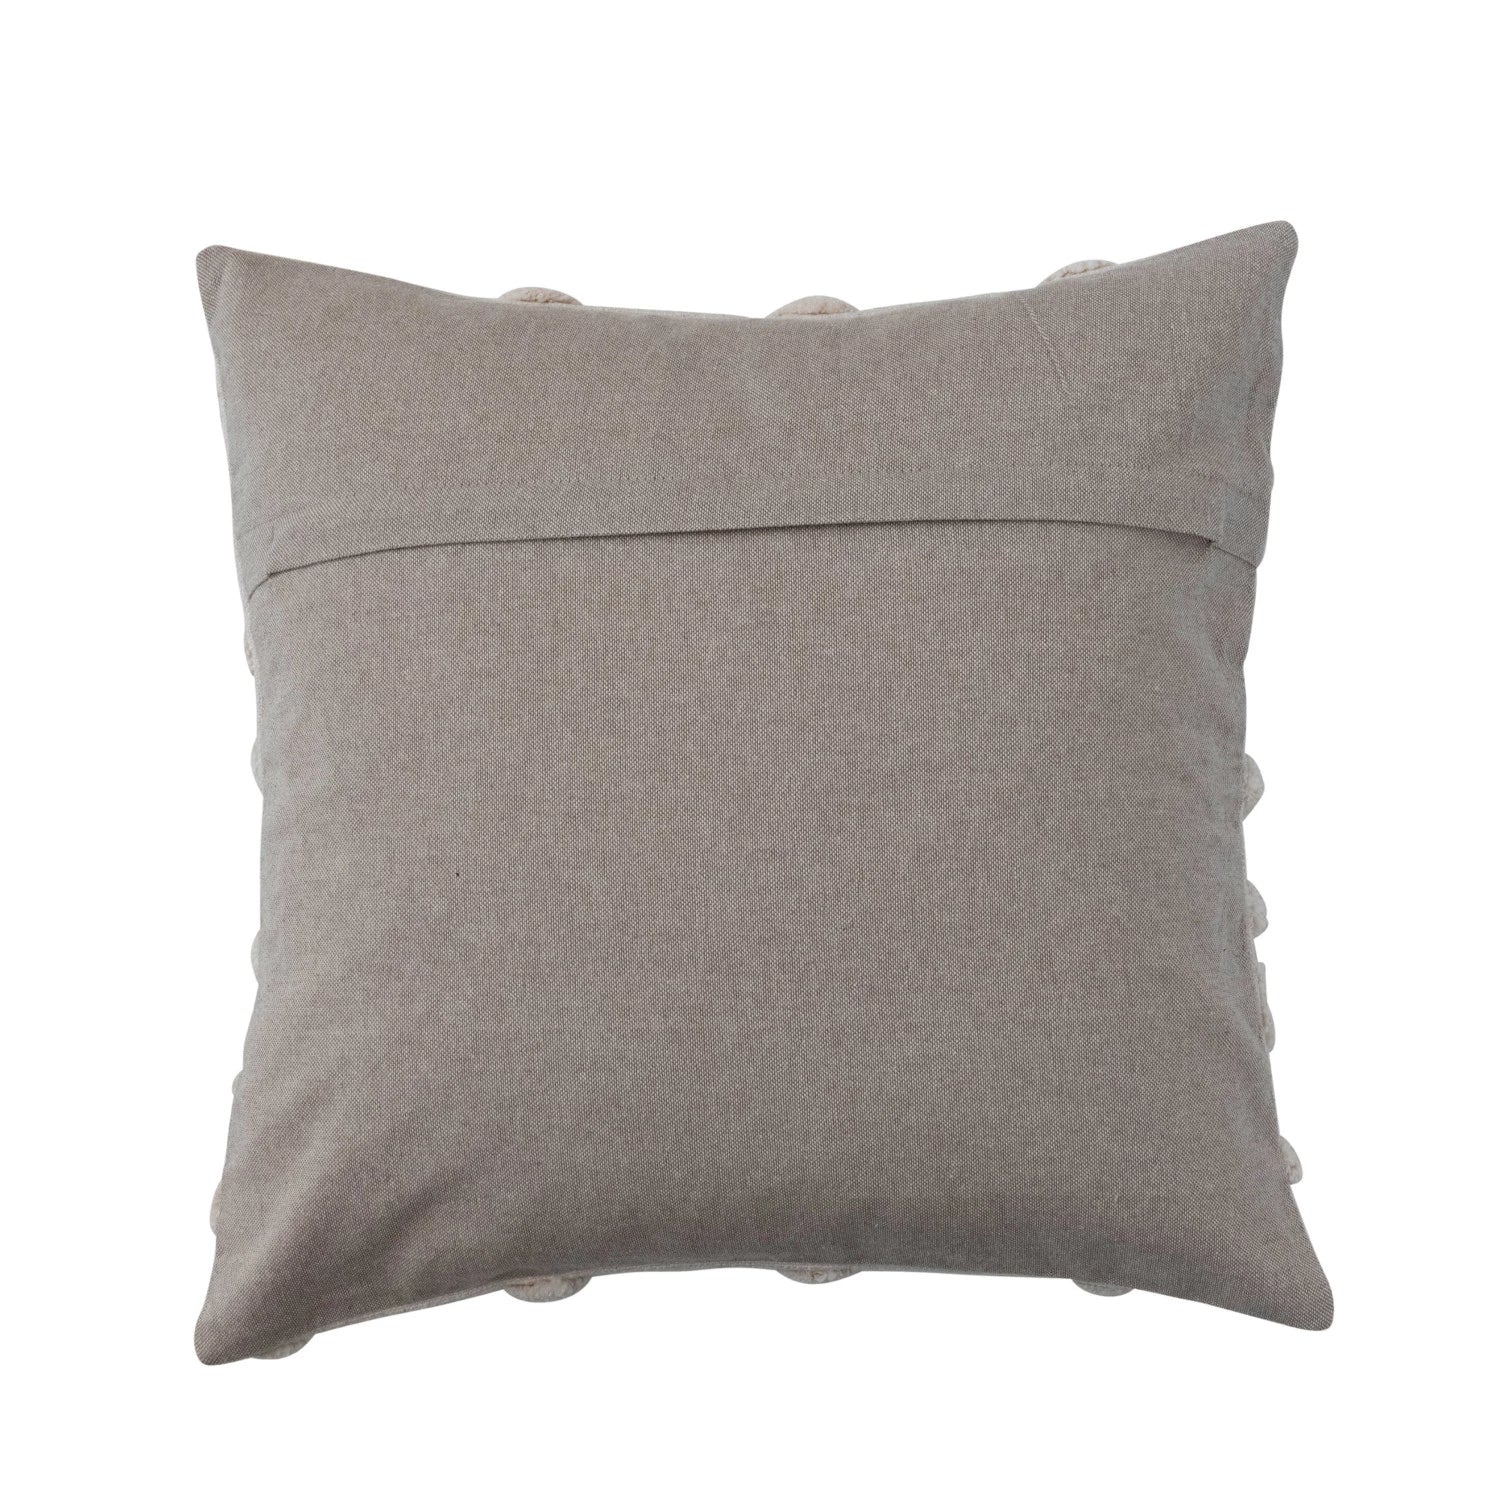 Cream Cotton Slub Pillow w/ Tufted Pattern